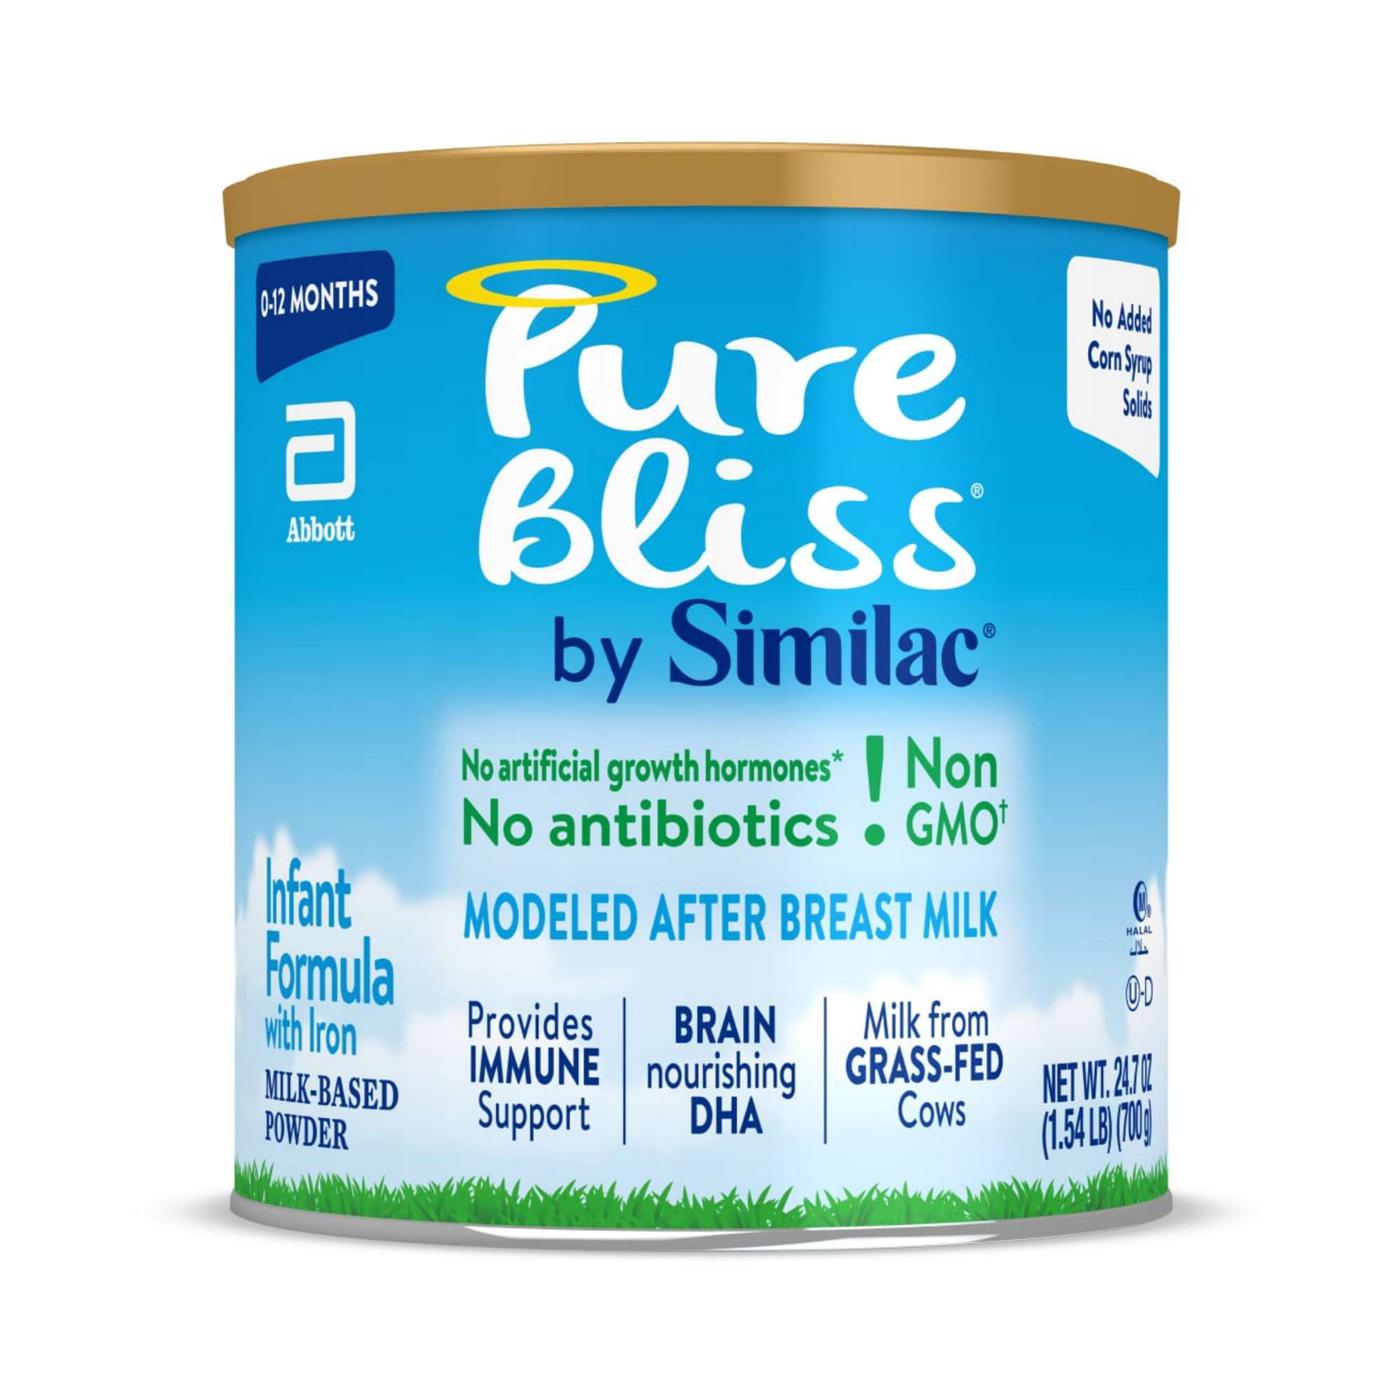 Similac Pure Bliss by Similac Infant Formula; image 1 of 2